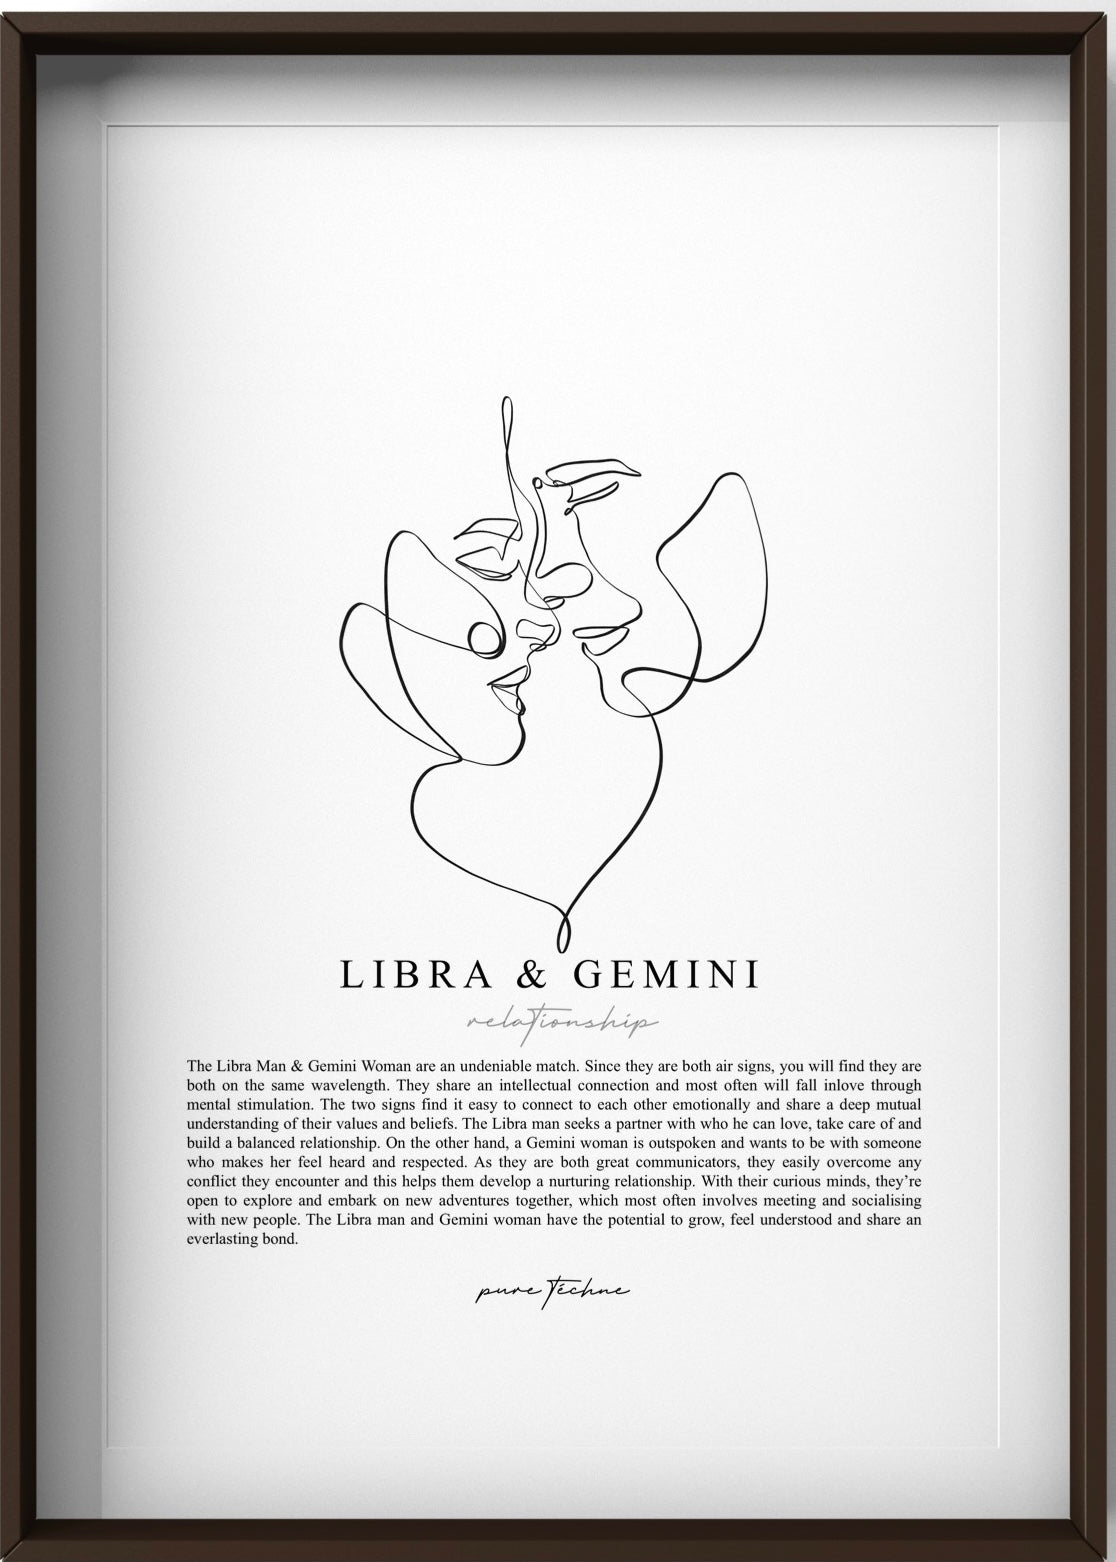 Libra Man & Gemini Woman